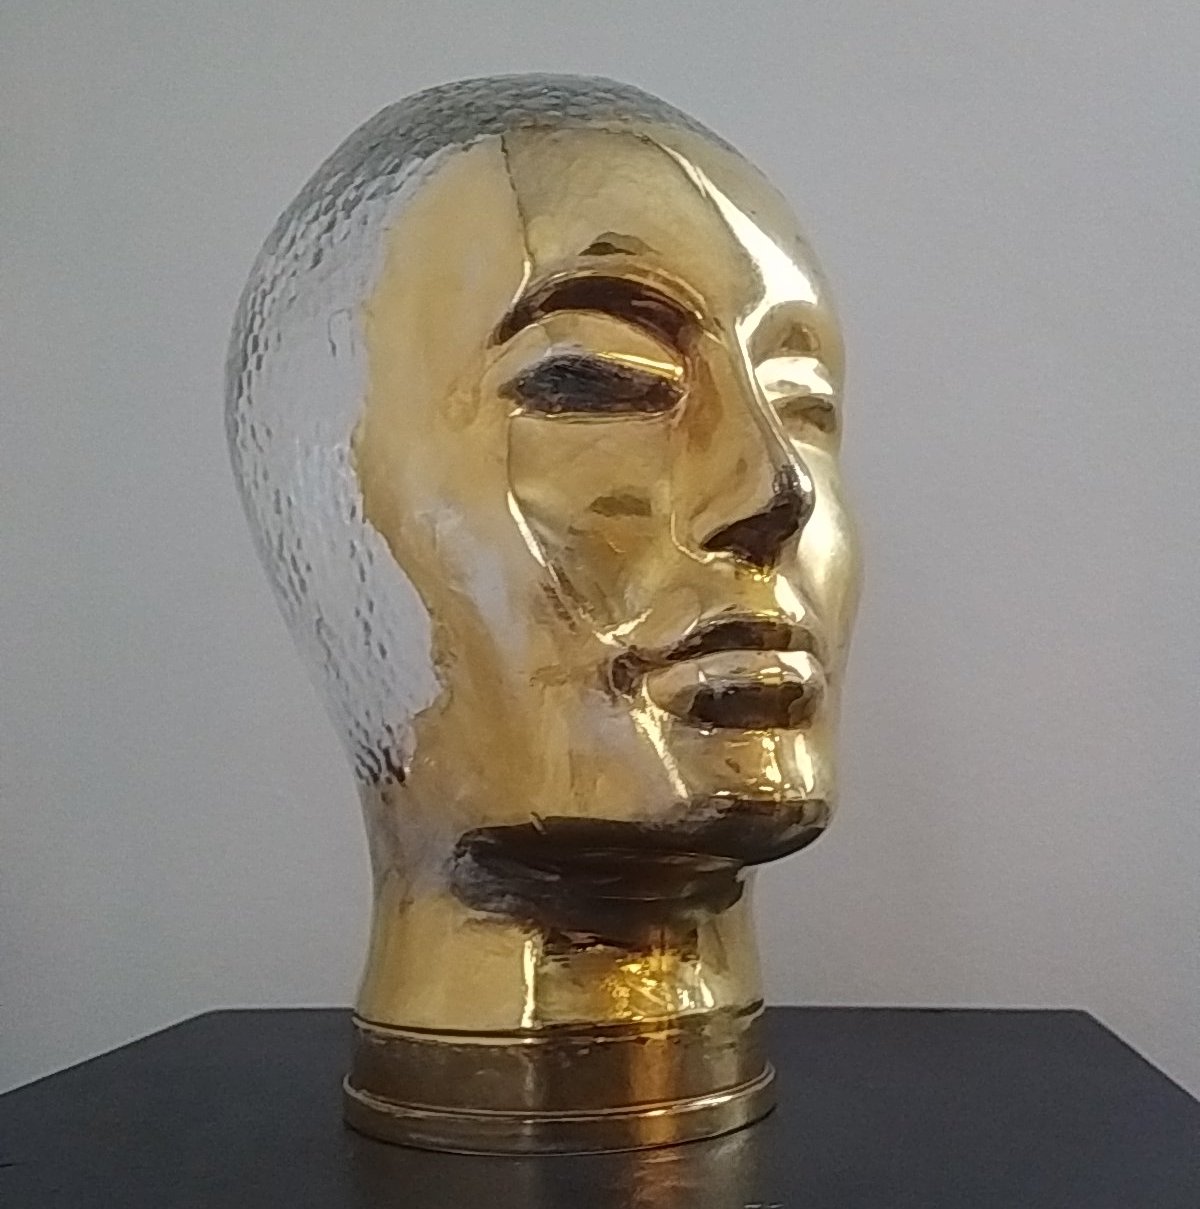 piero-fornasetti-gold-head-very-rare.jpg